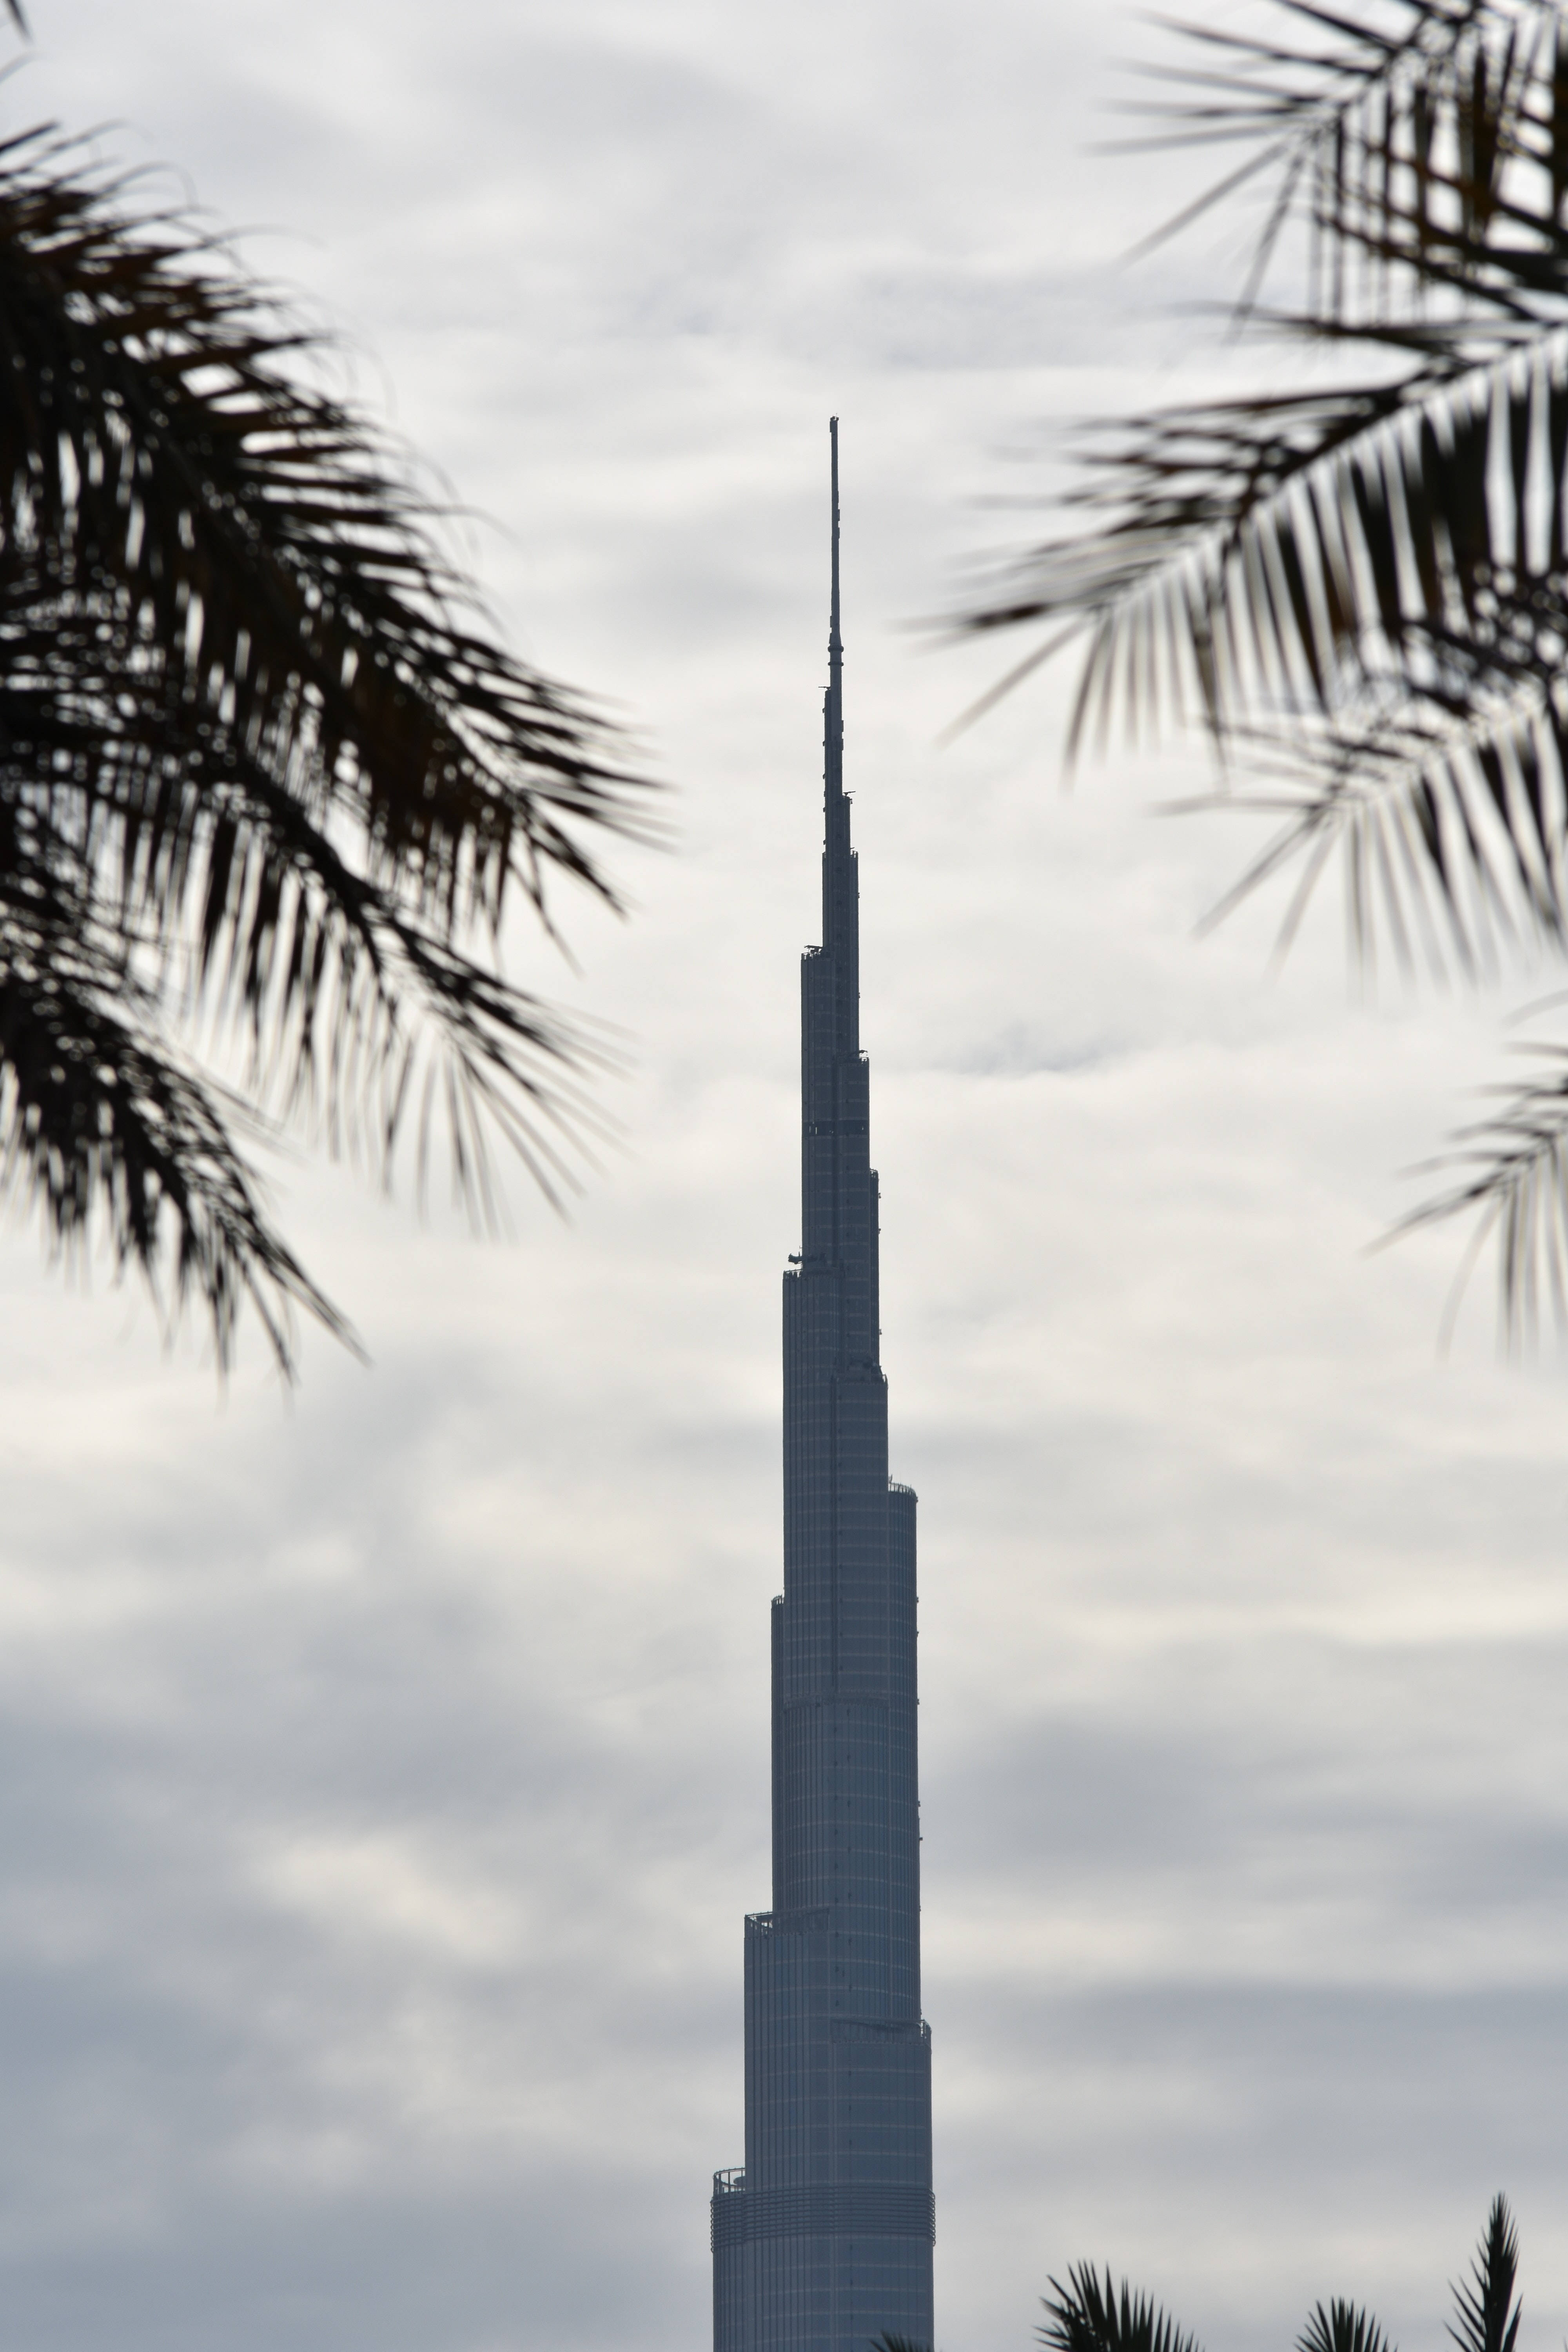 Majestic Burj Khalifa Framed By Lush Palm Trees Wallpaper